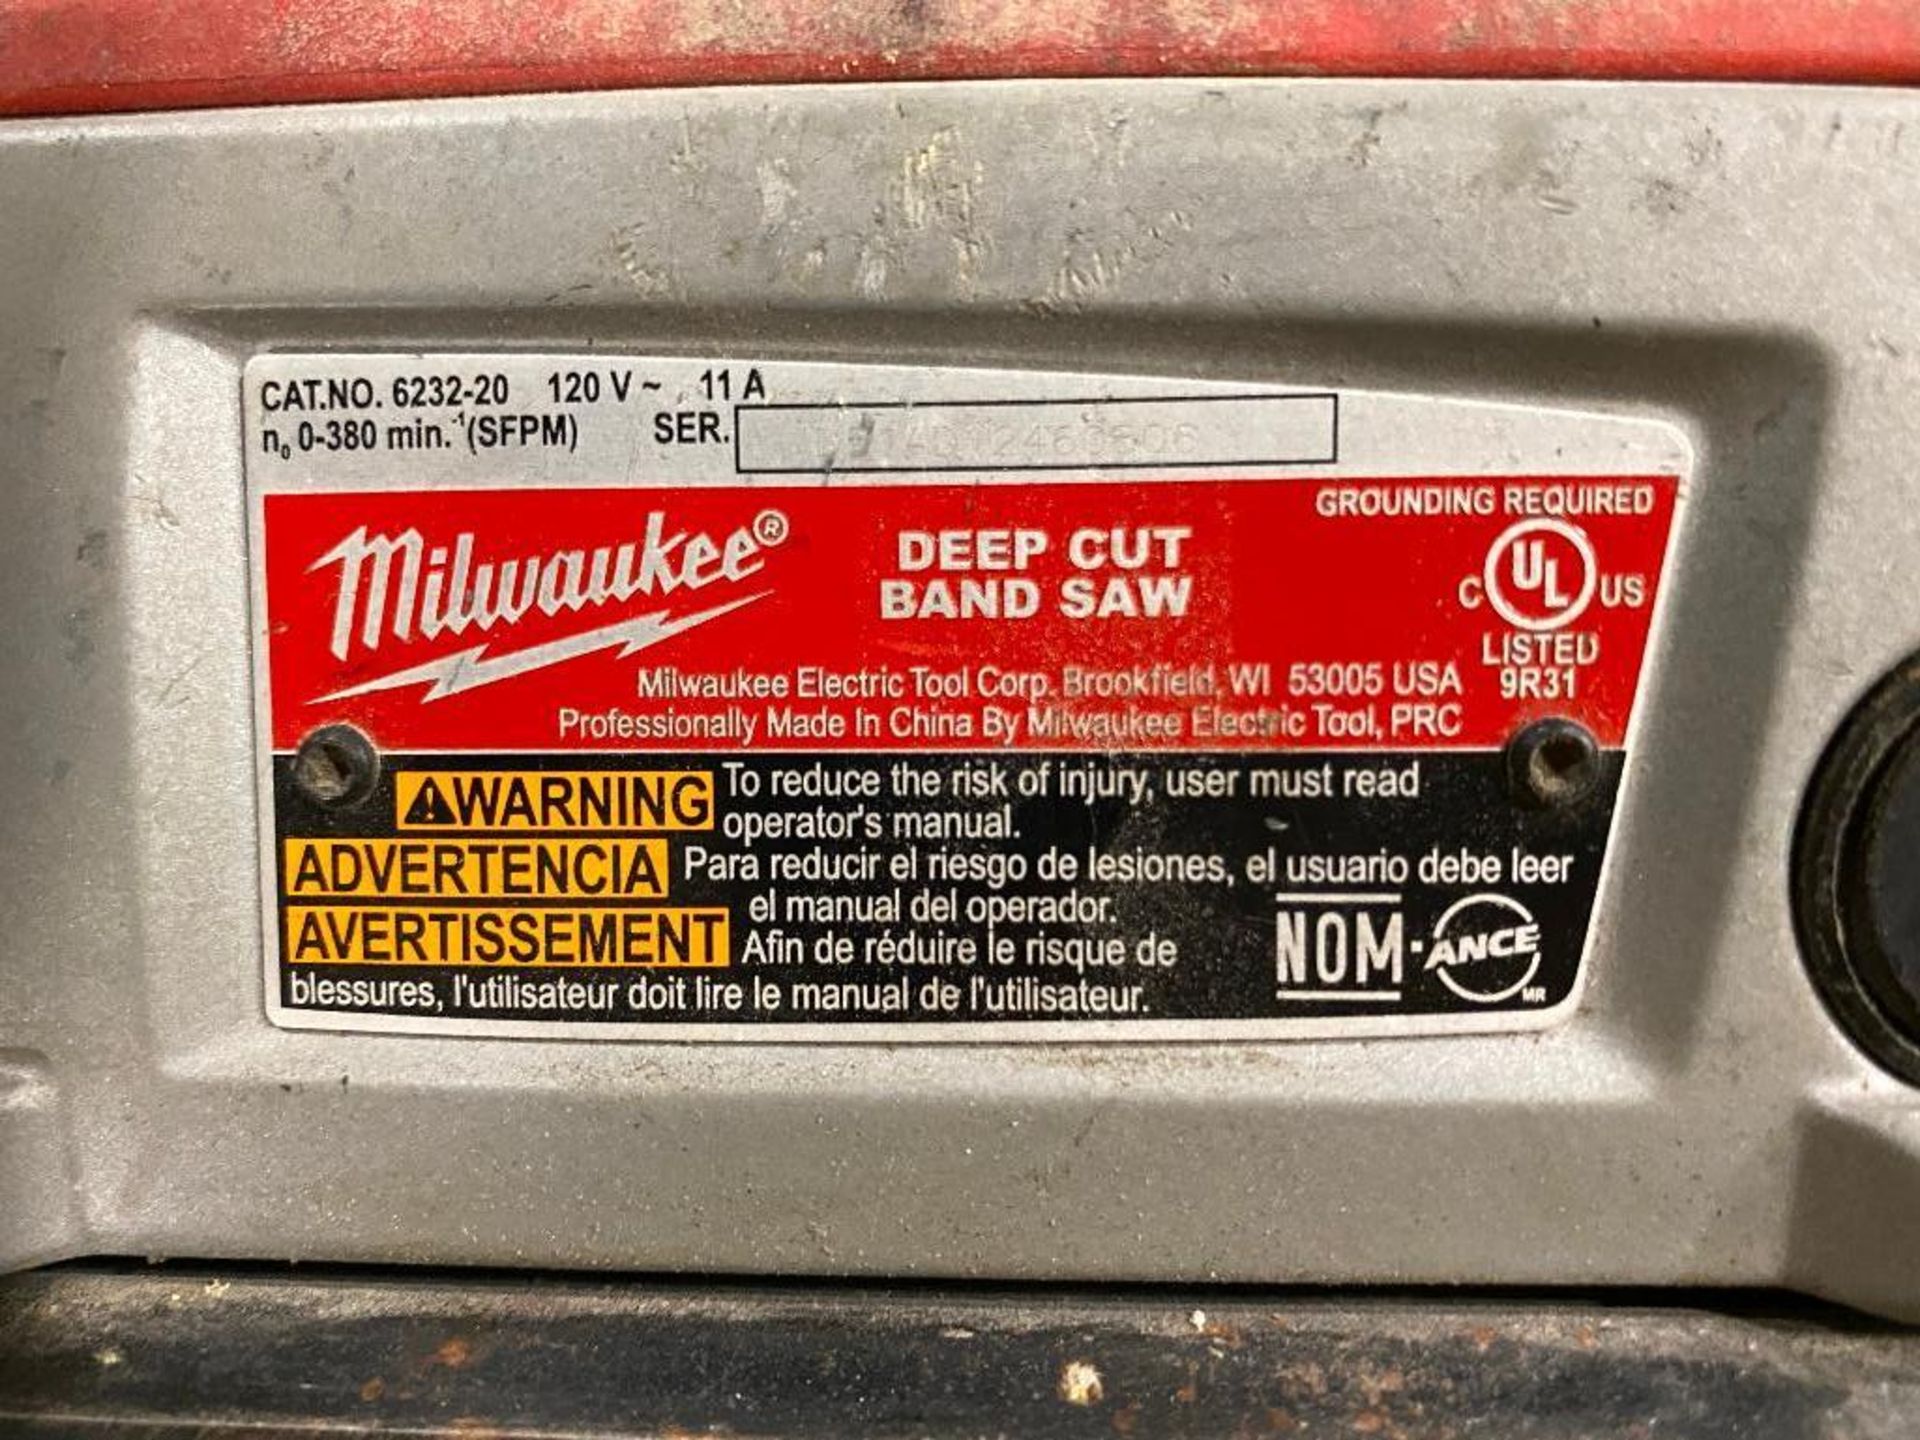 Milwaukee 6232-20 Deep Cut Band Saw - Image 3 of 3